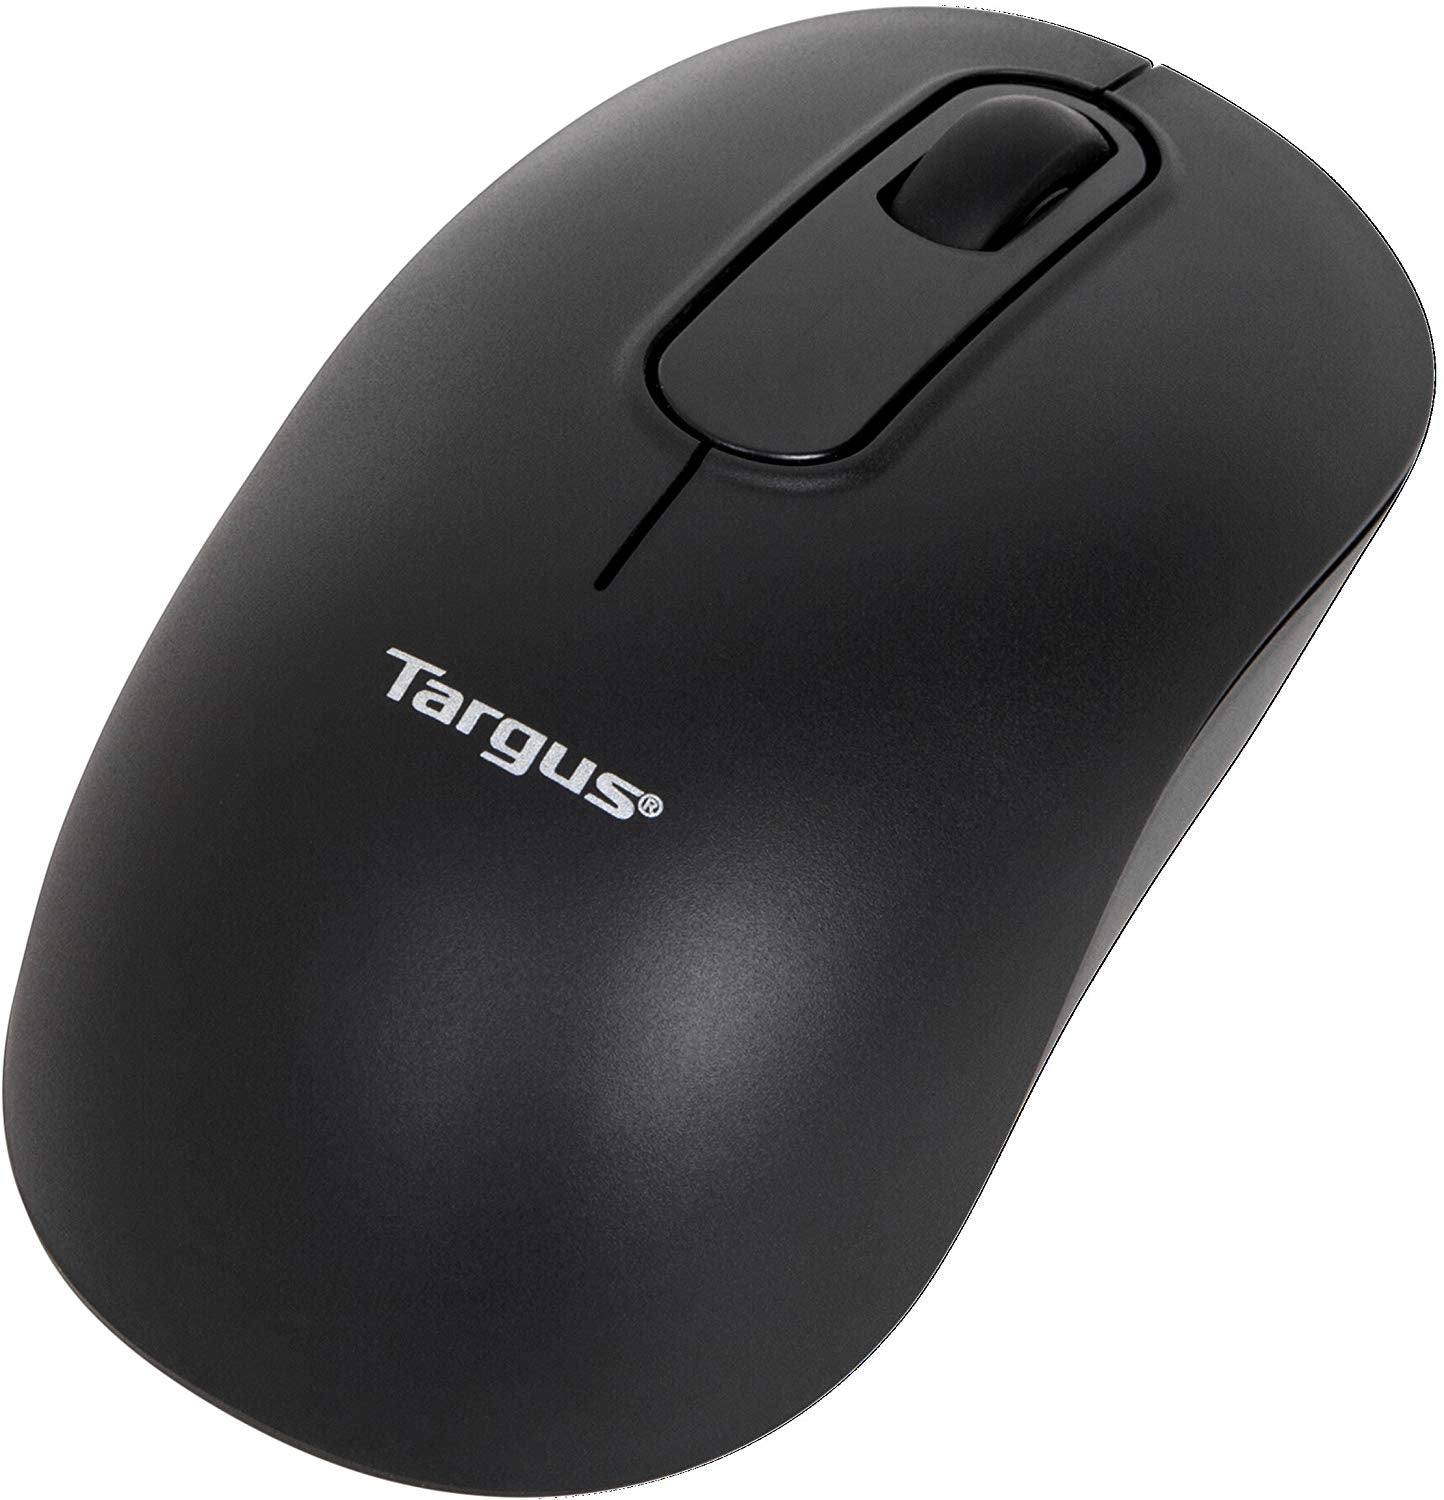 Targus B580 Bluetooth Mouse with 1,600 DPI Optical Sensor, Black